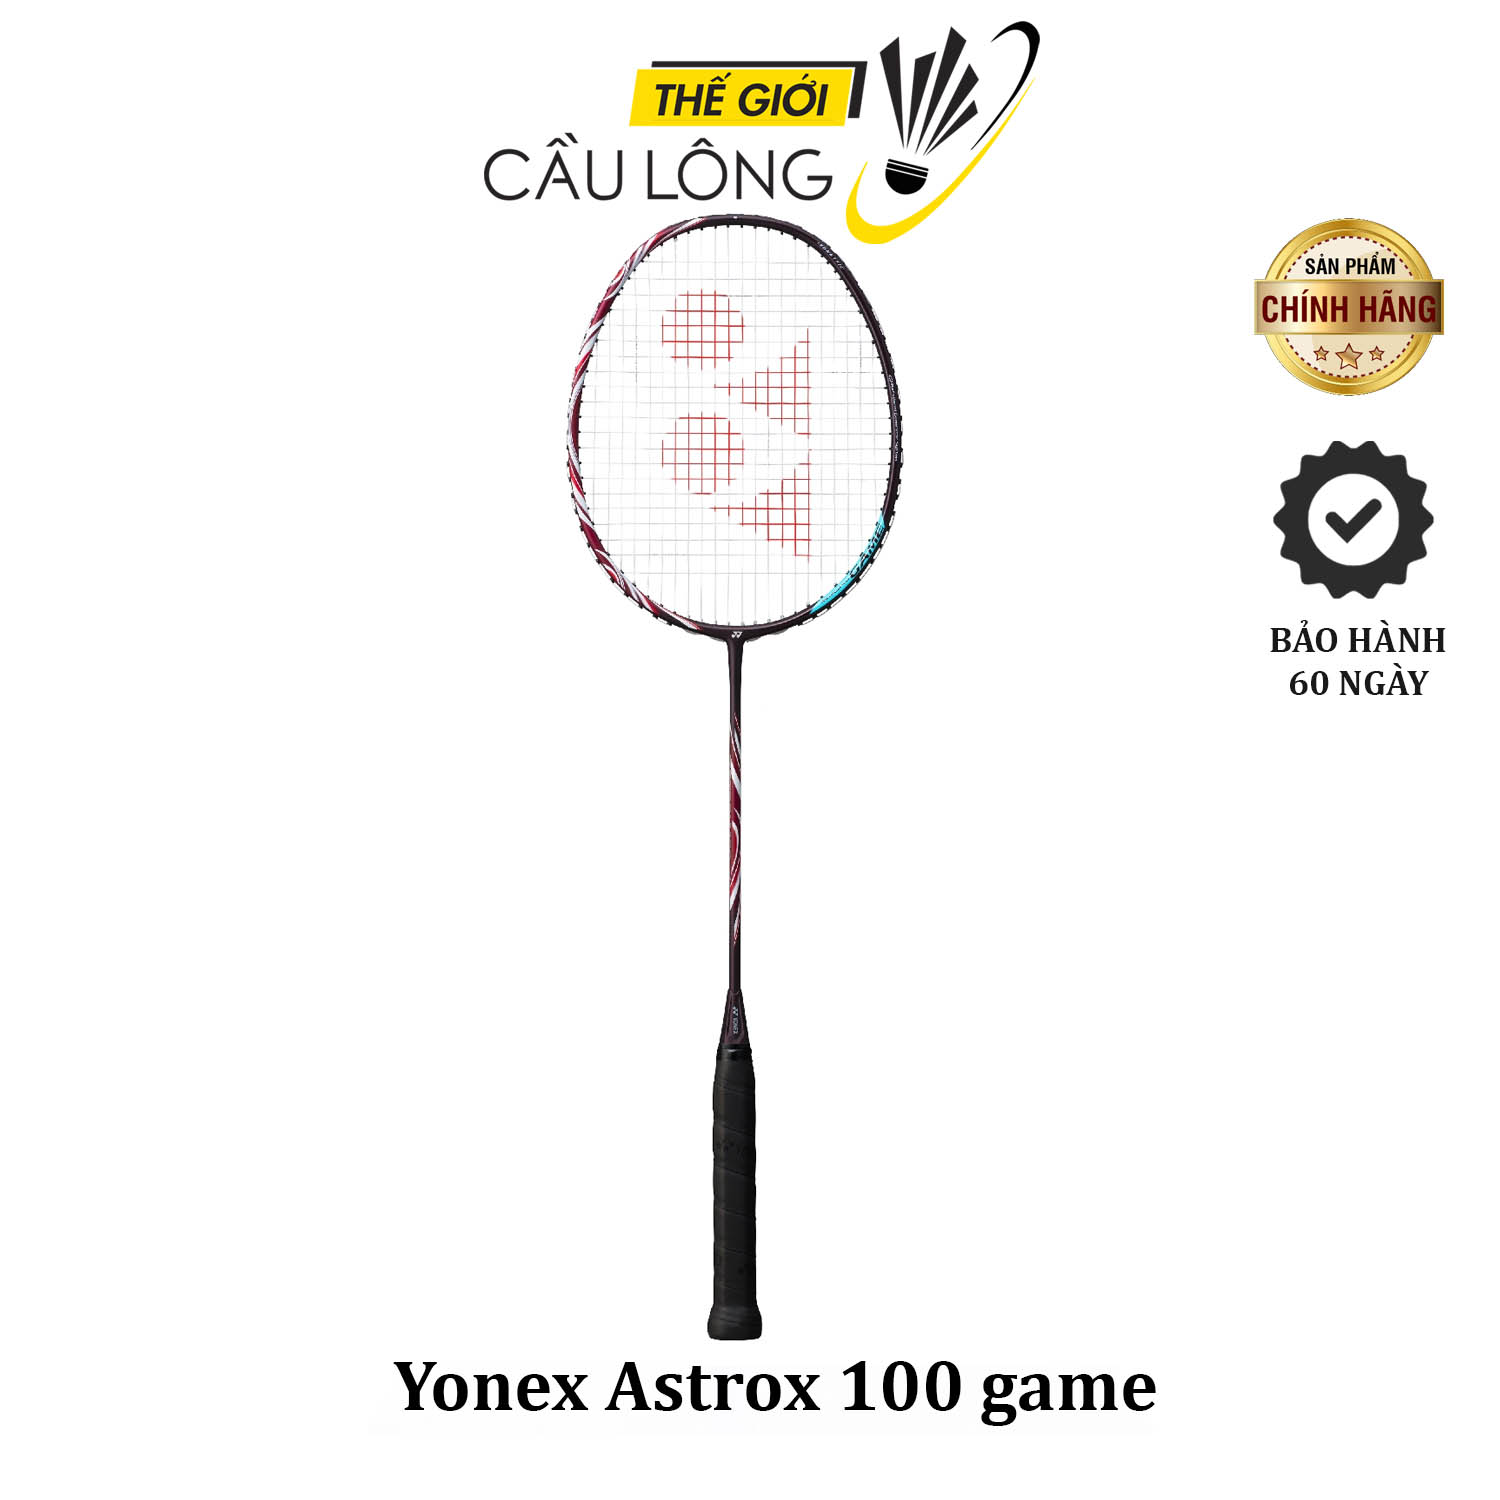 yonex astrox 100 game